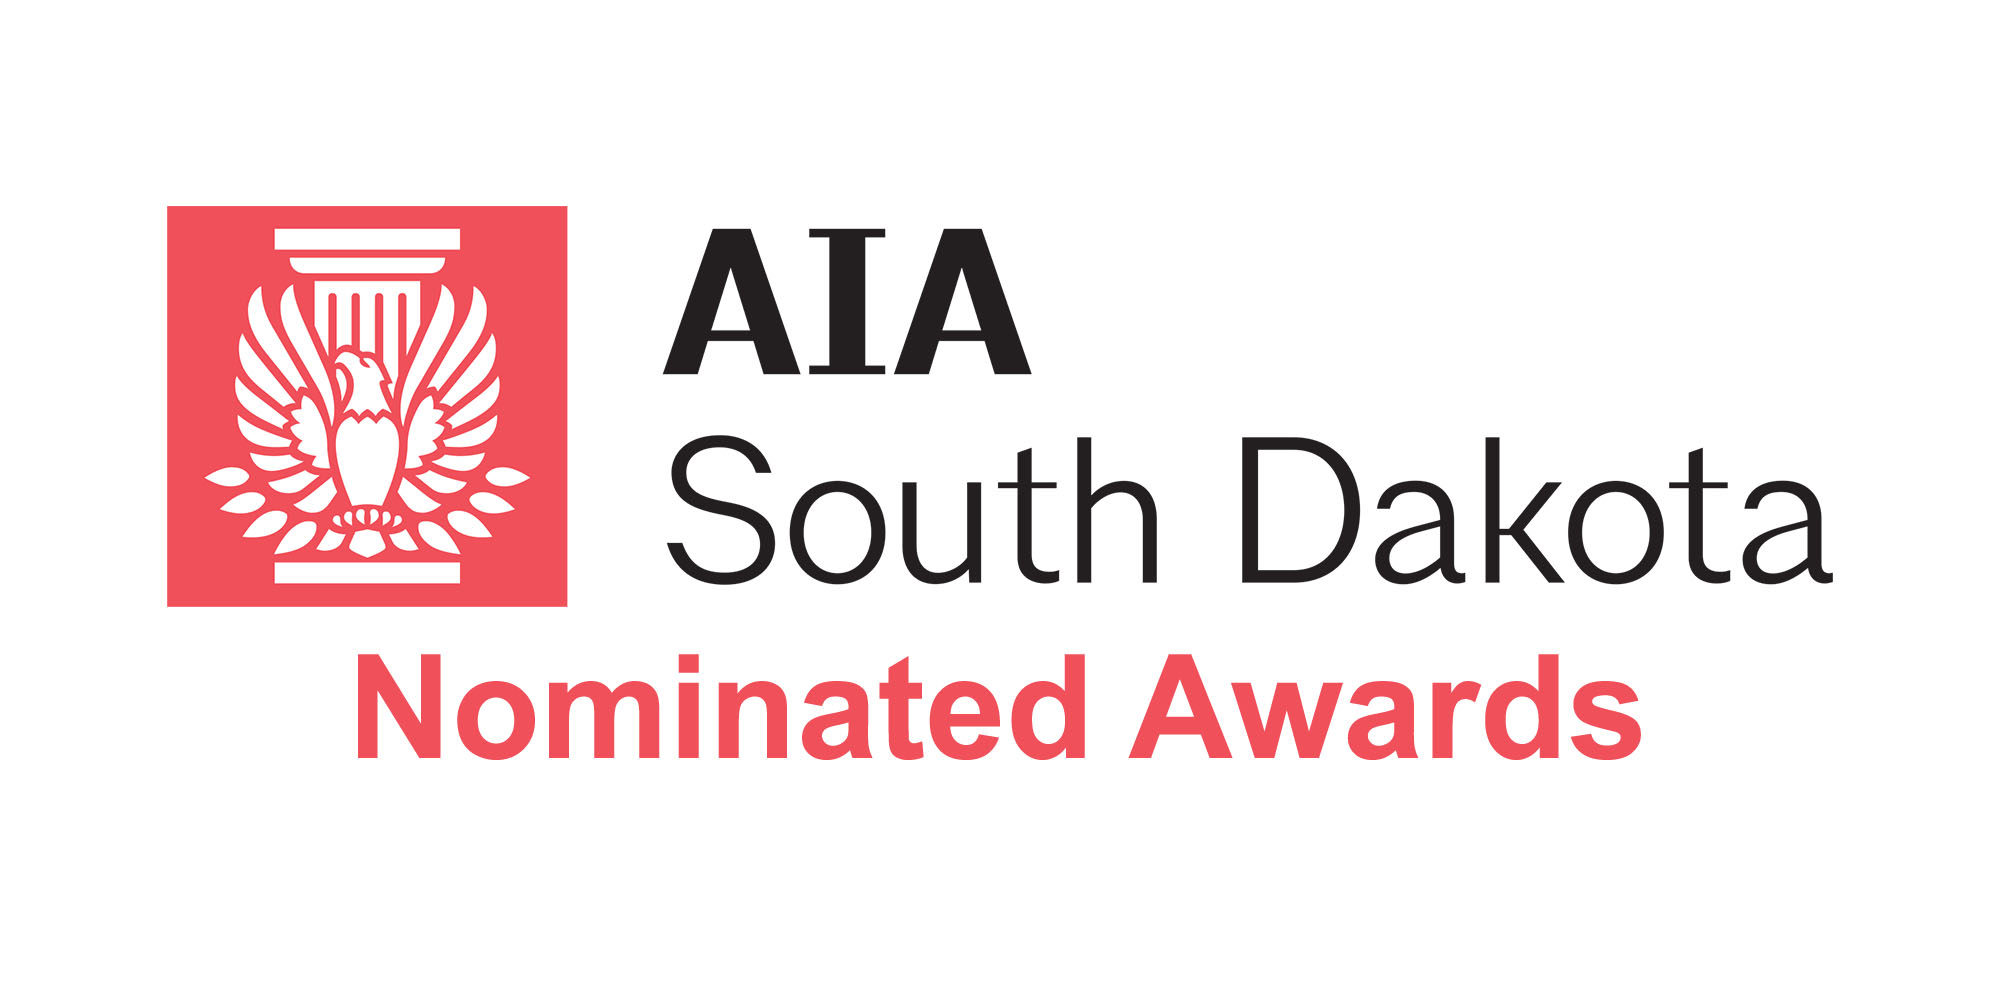 AIA SD Nominated Awards